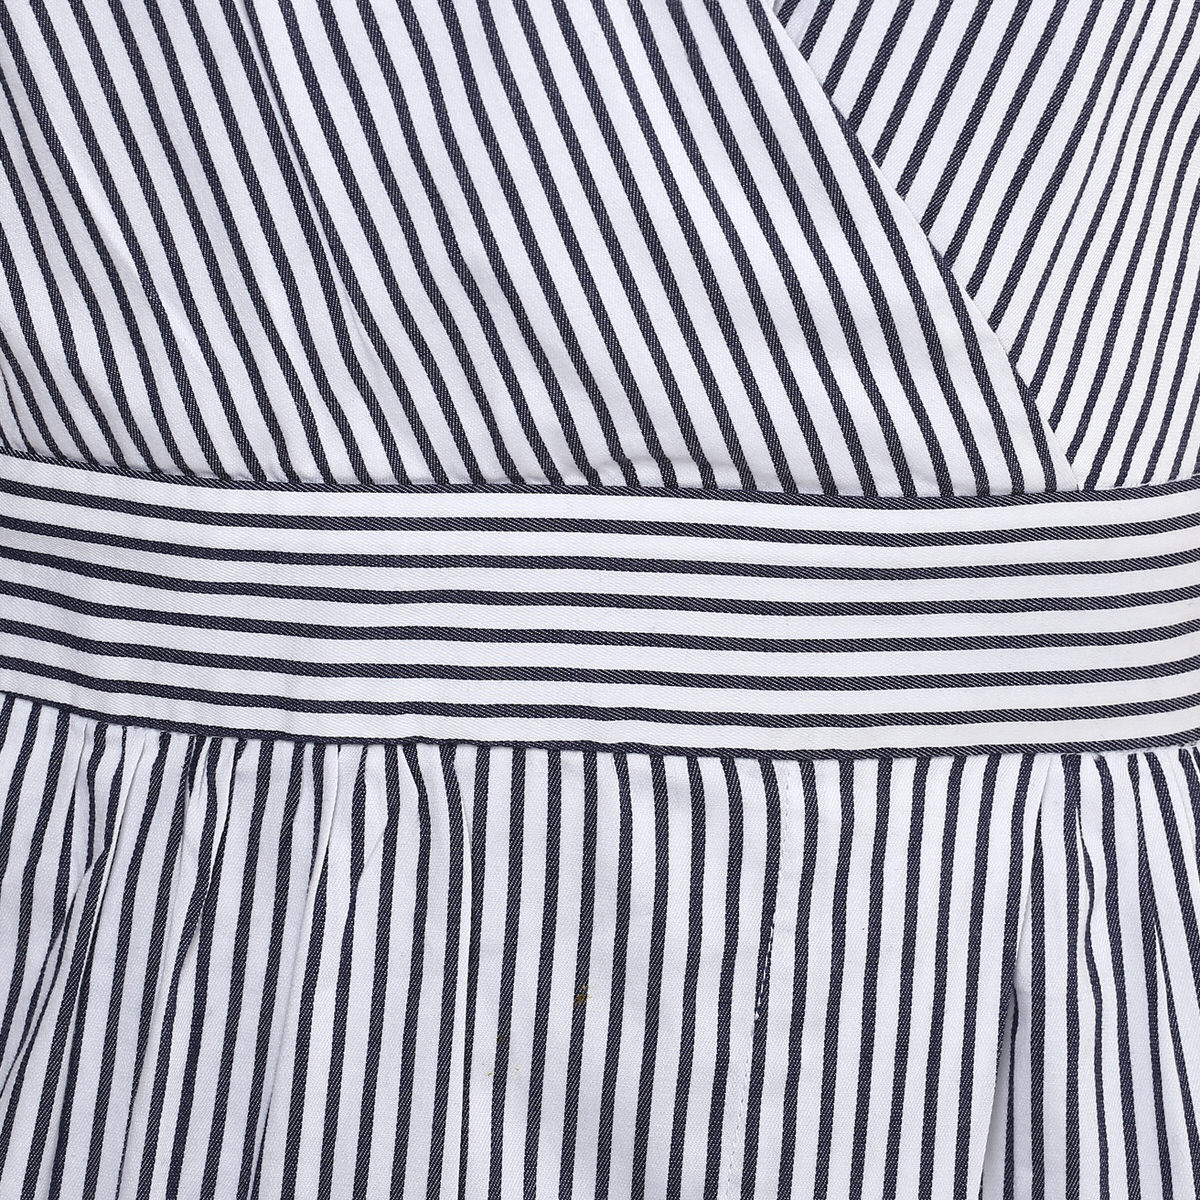 Stripe dress by POST FOLD | The Secret Label